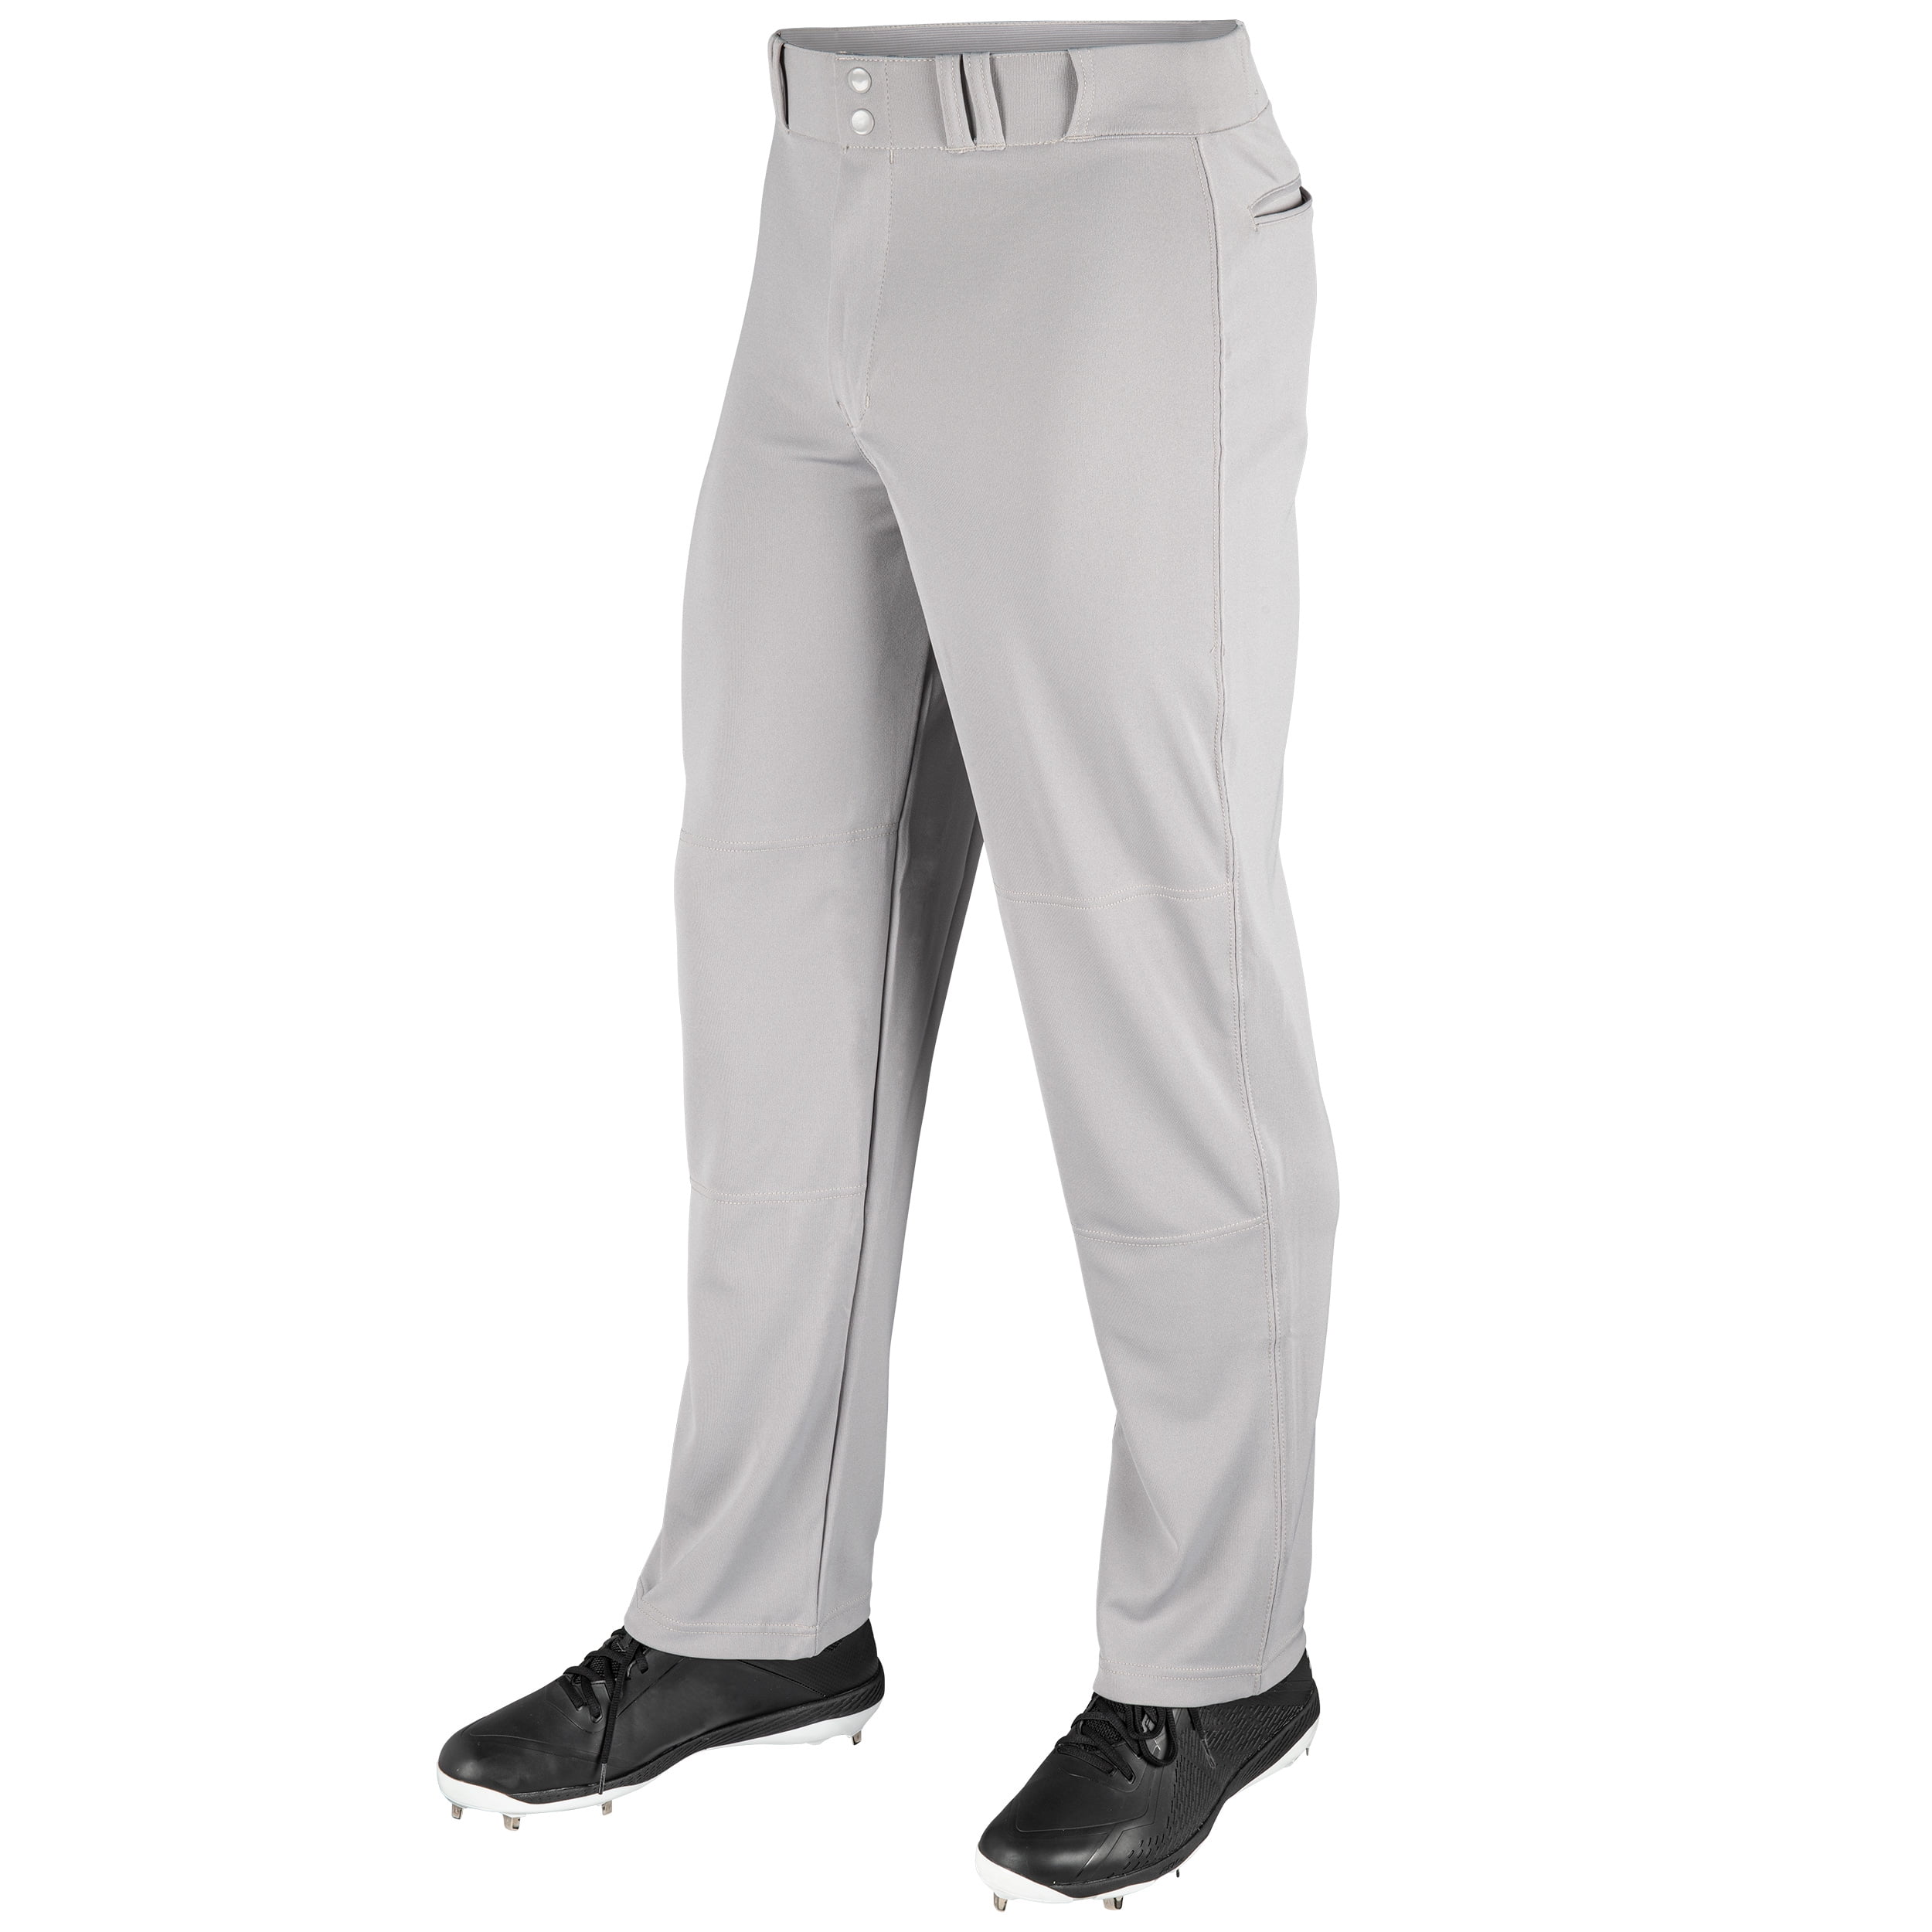 Youth Size Large Under Armour Gray Grey Open Leg Baseball Softball Pants New 